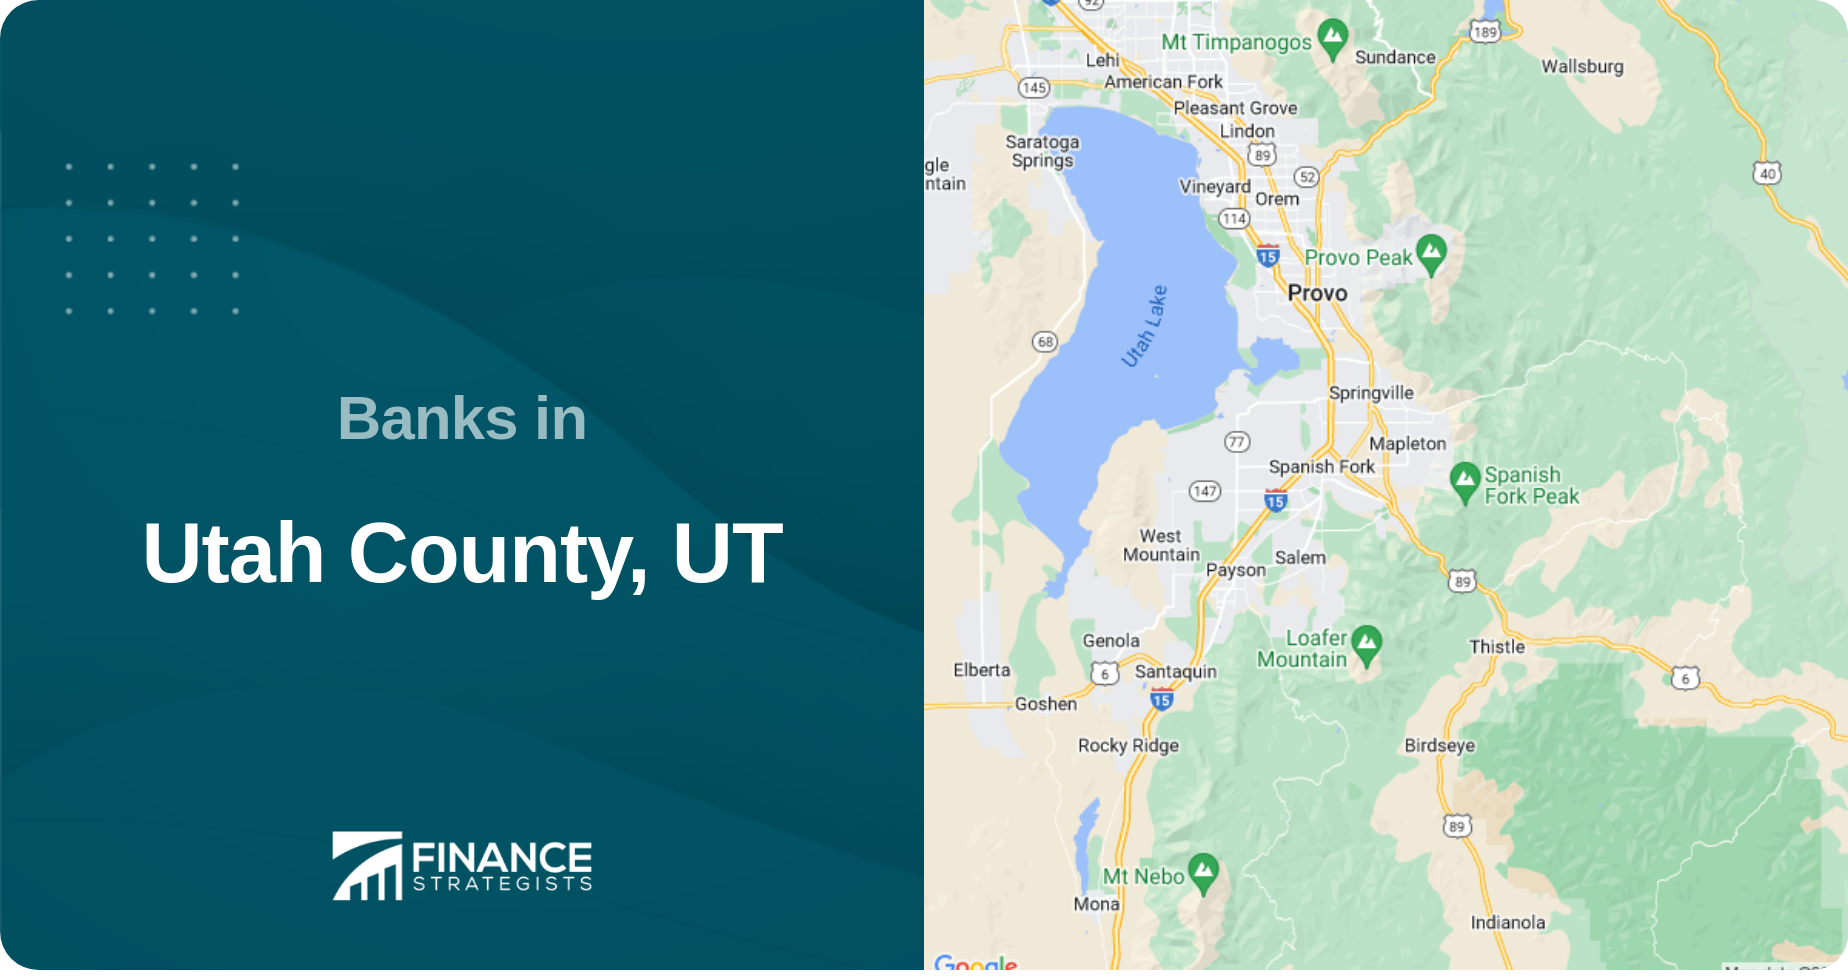 Banks in Utah County, UT